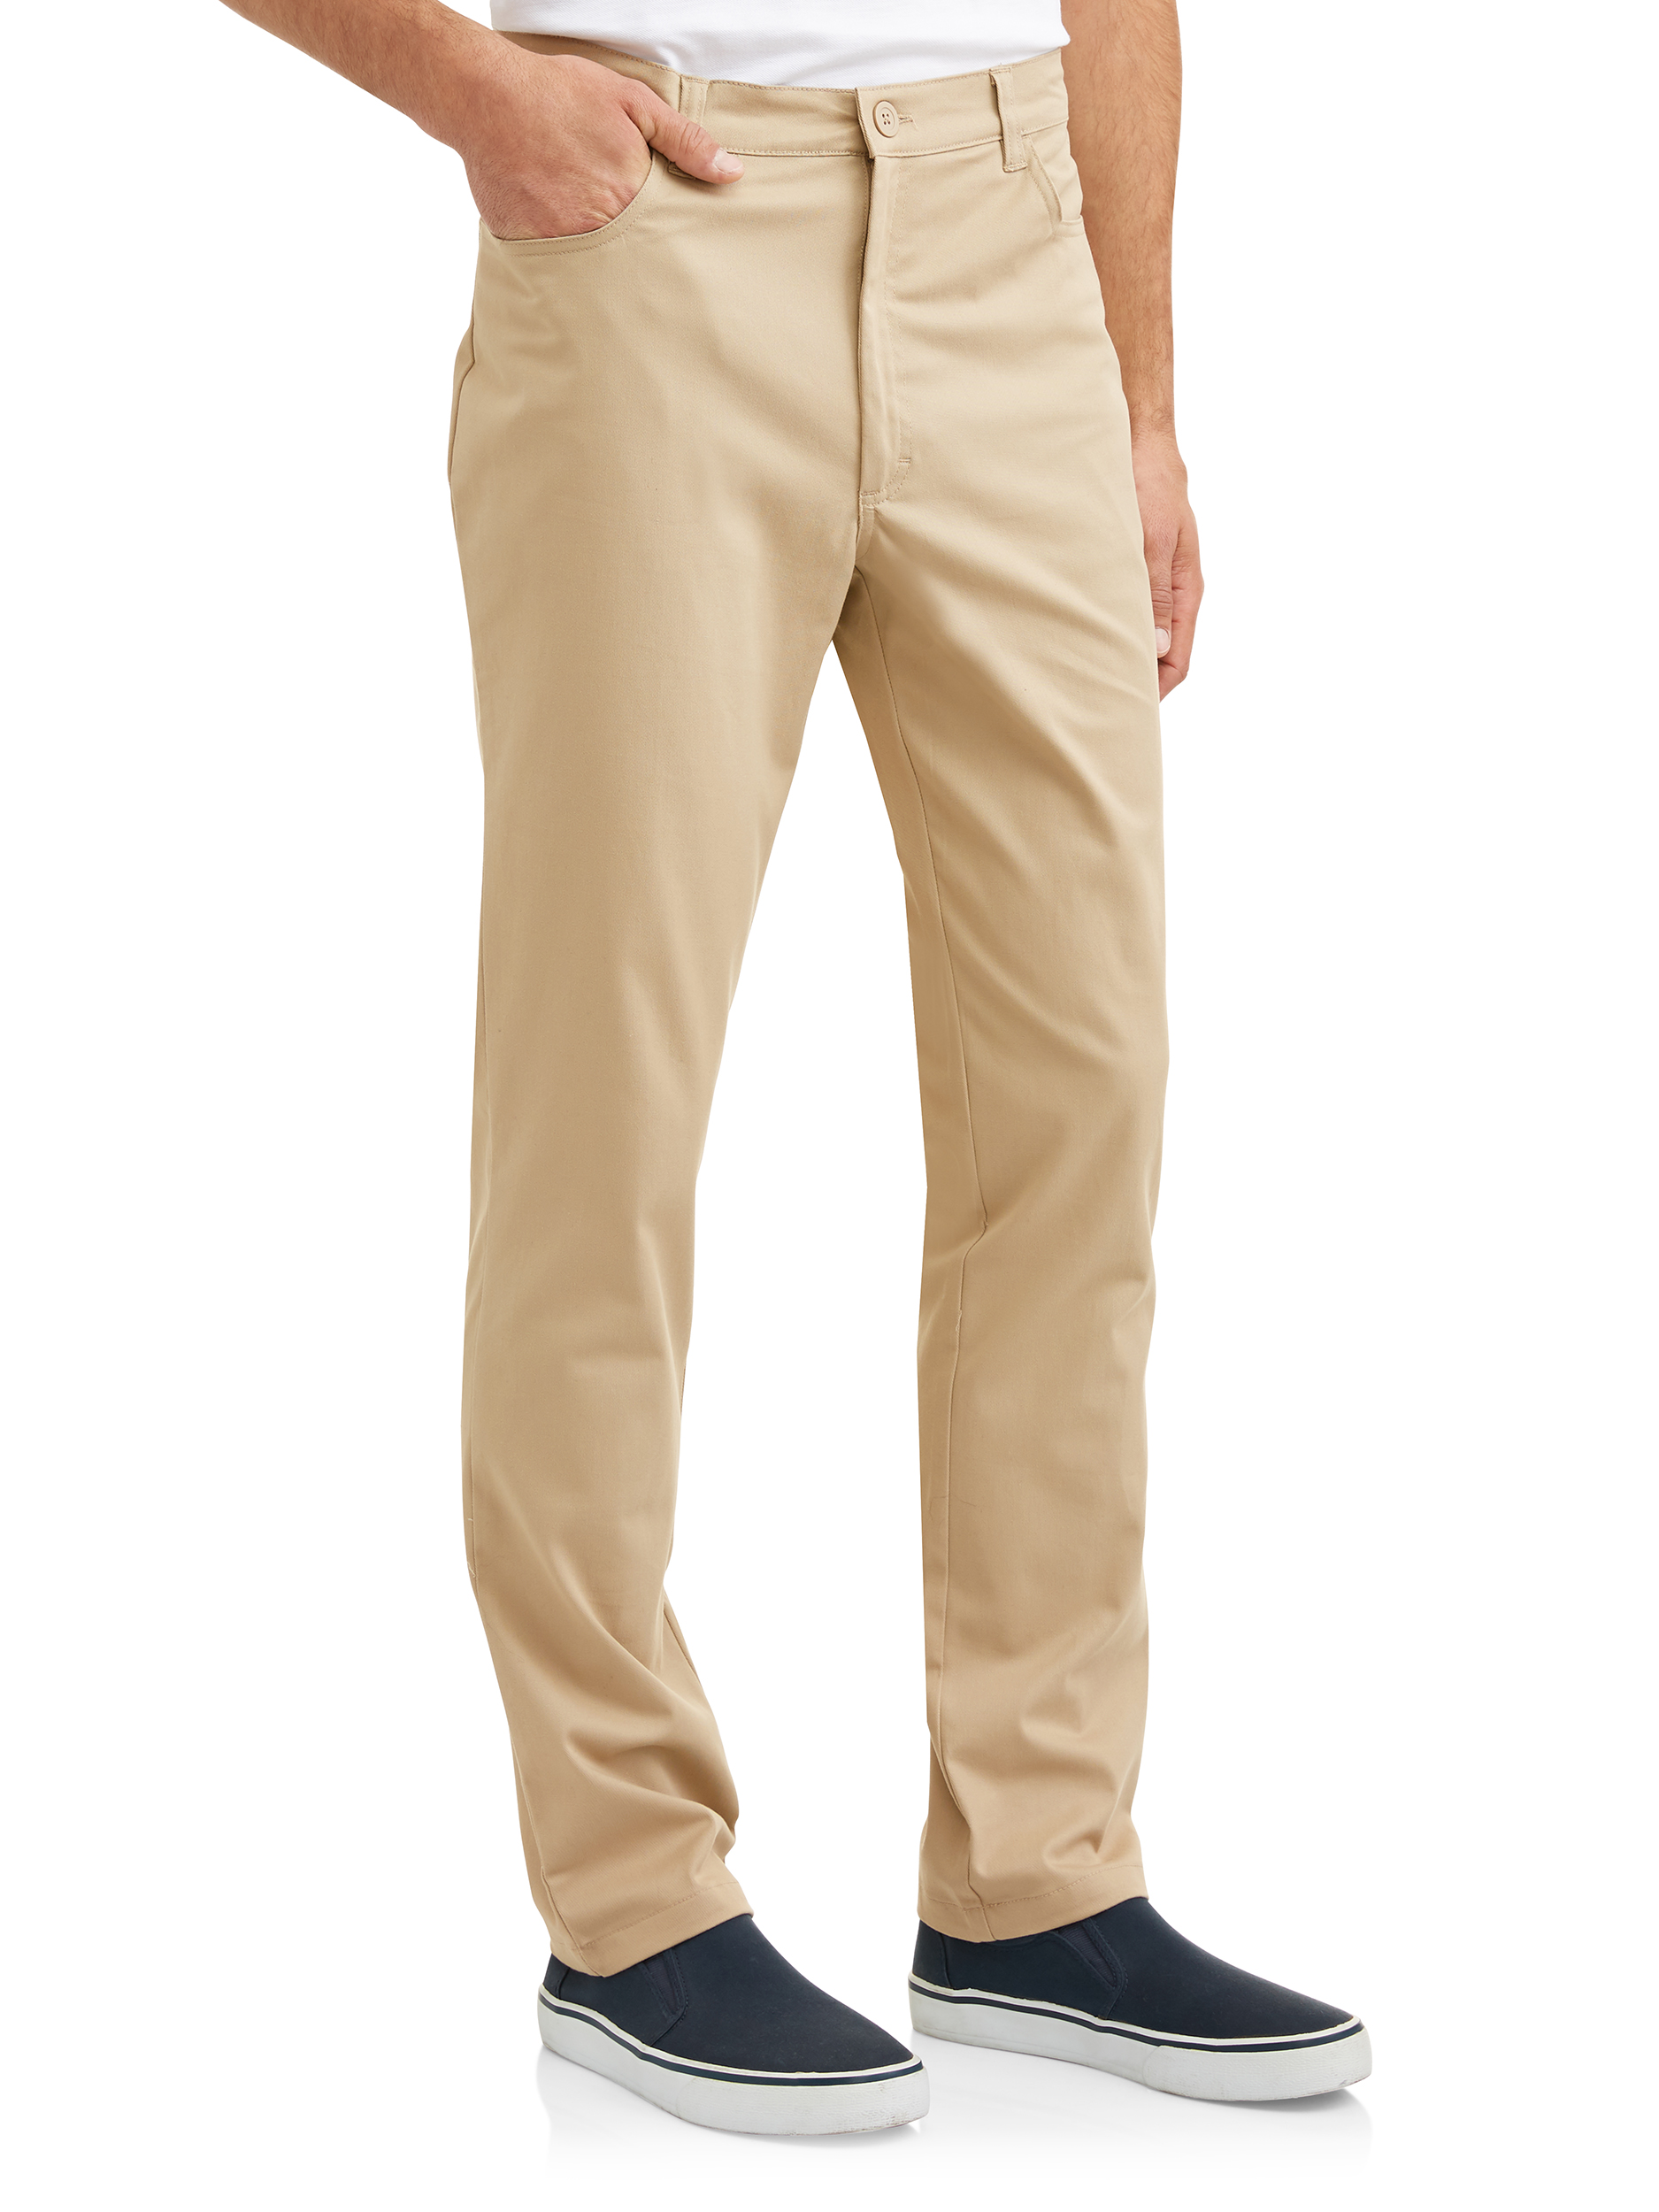 Real School Young Men's Uniform 5-Pocket Stretch Skinny Leg Pant - image 3 of 3